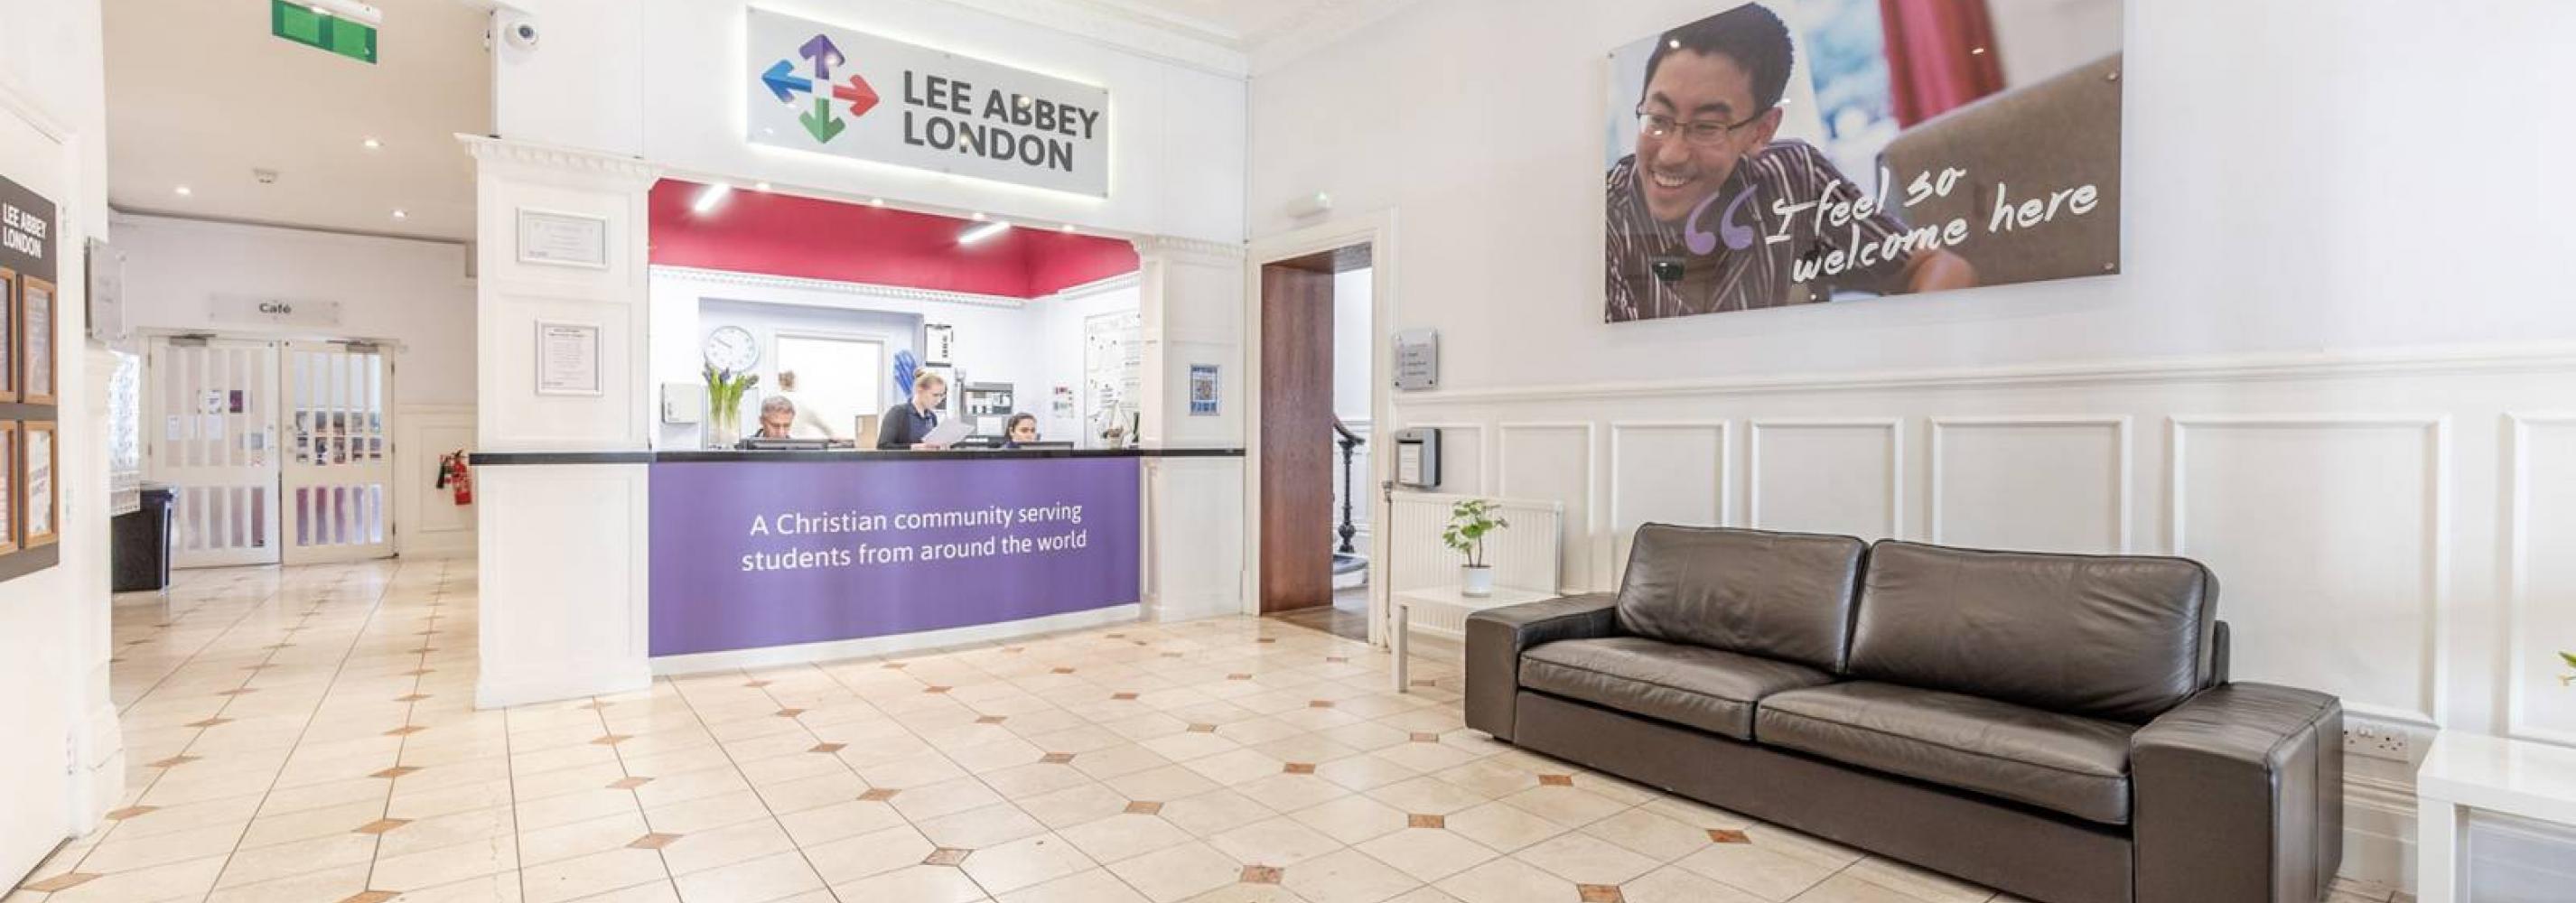 Reception of Lee Abbey London student residence in Kensington